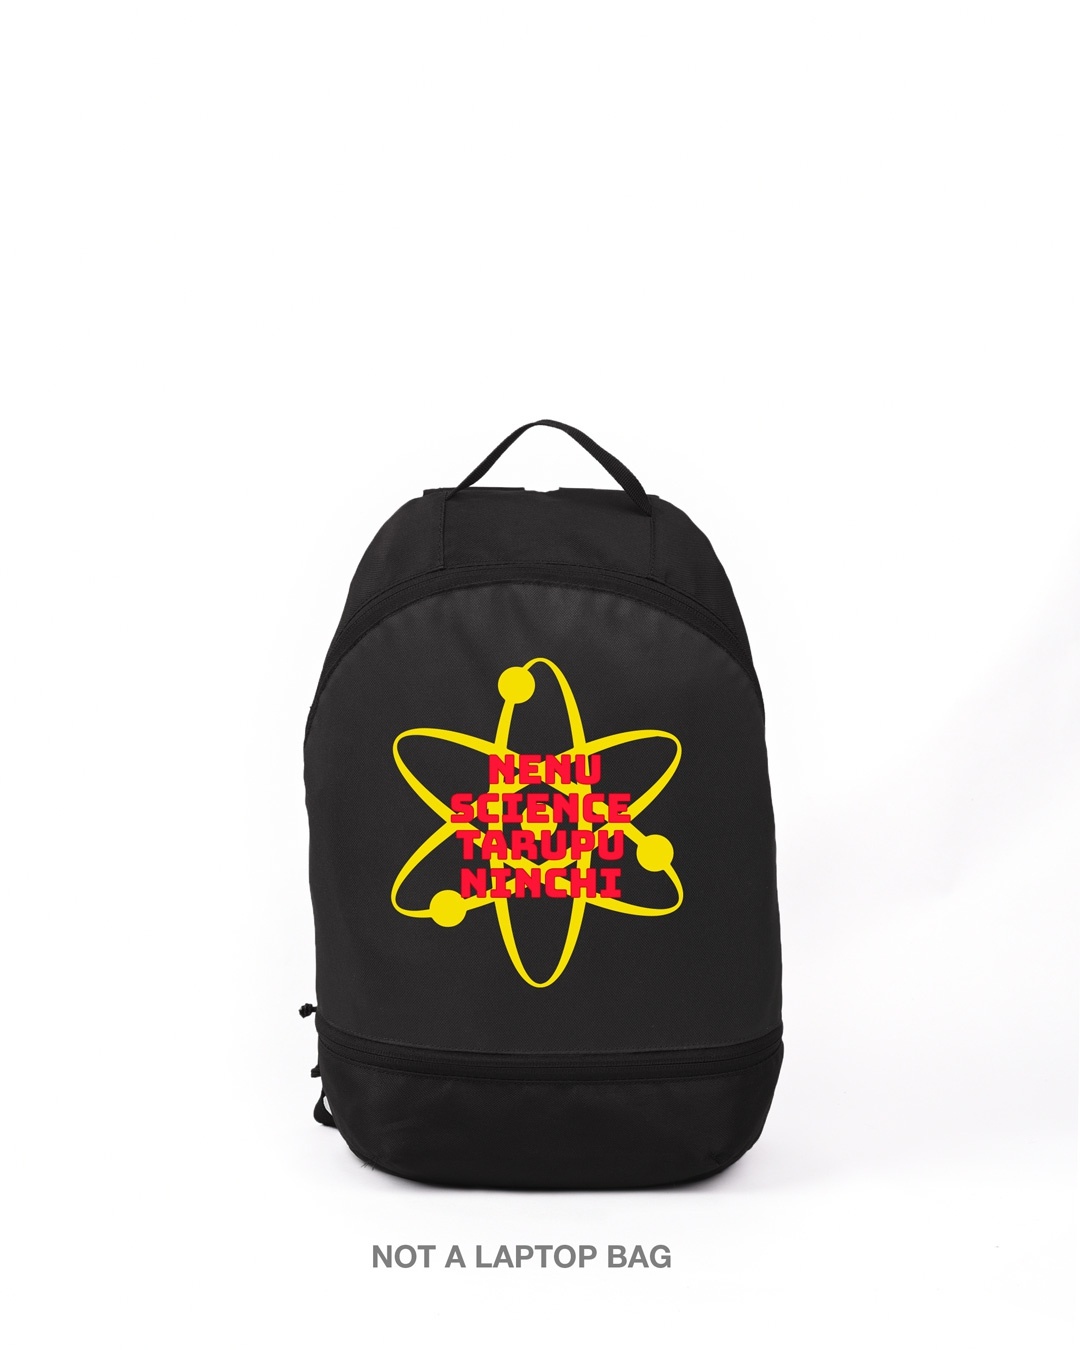 Shop Nenu Science Tarupu Small backpack-Front